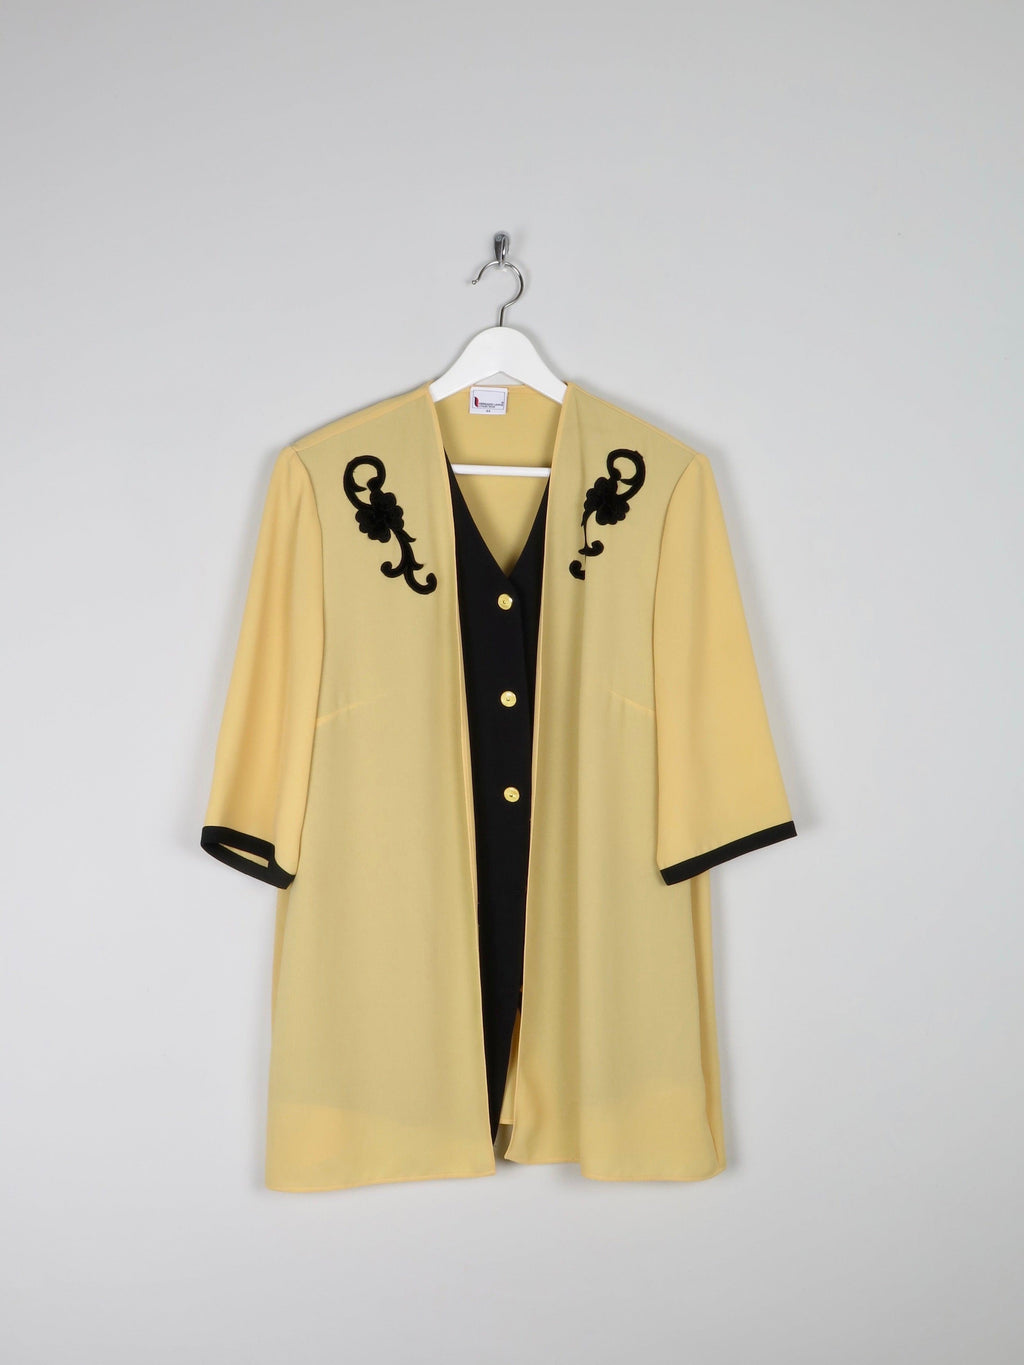 Women's Vintage Buttermilk Yellow Blouse/Jacket L/XL - The Harlequin